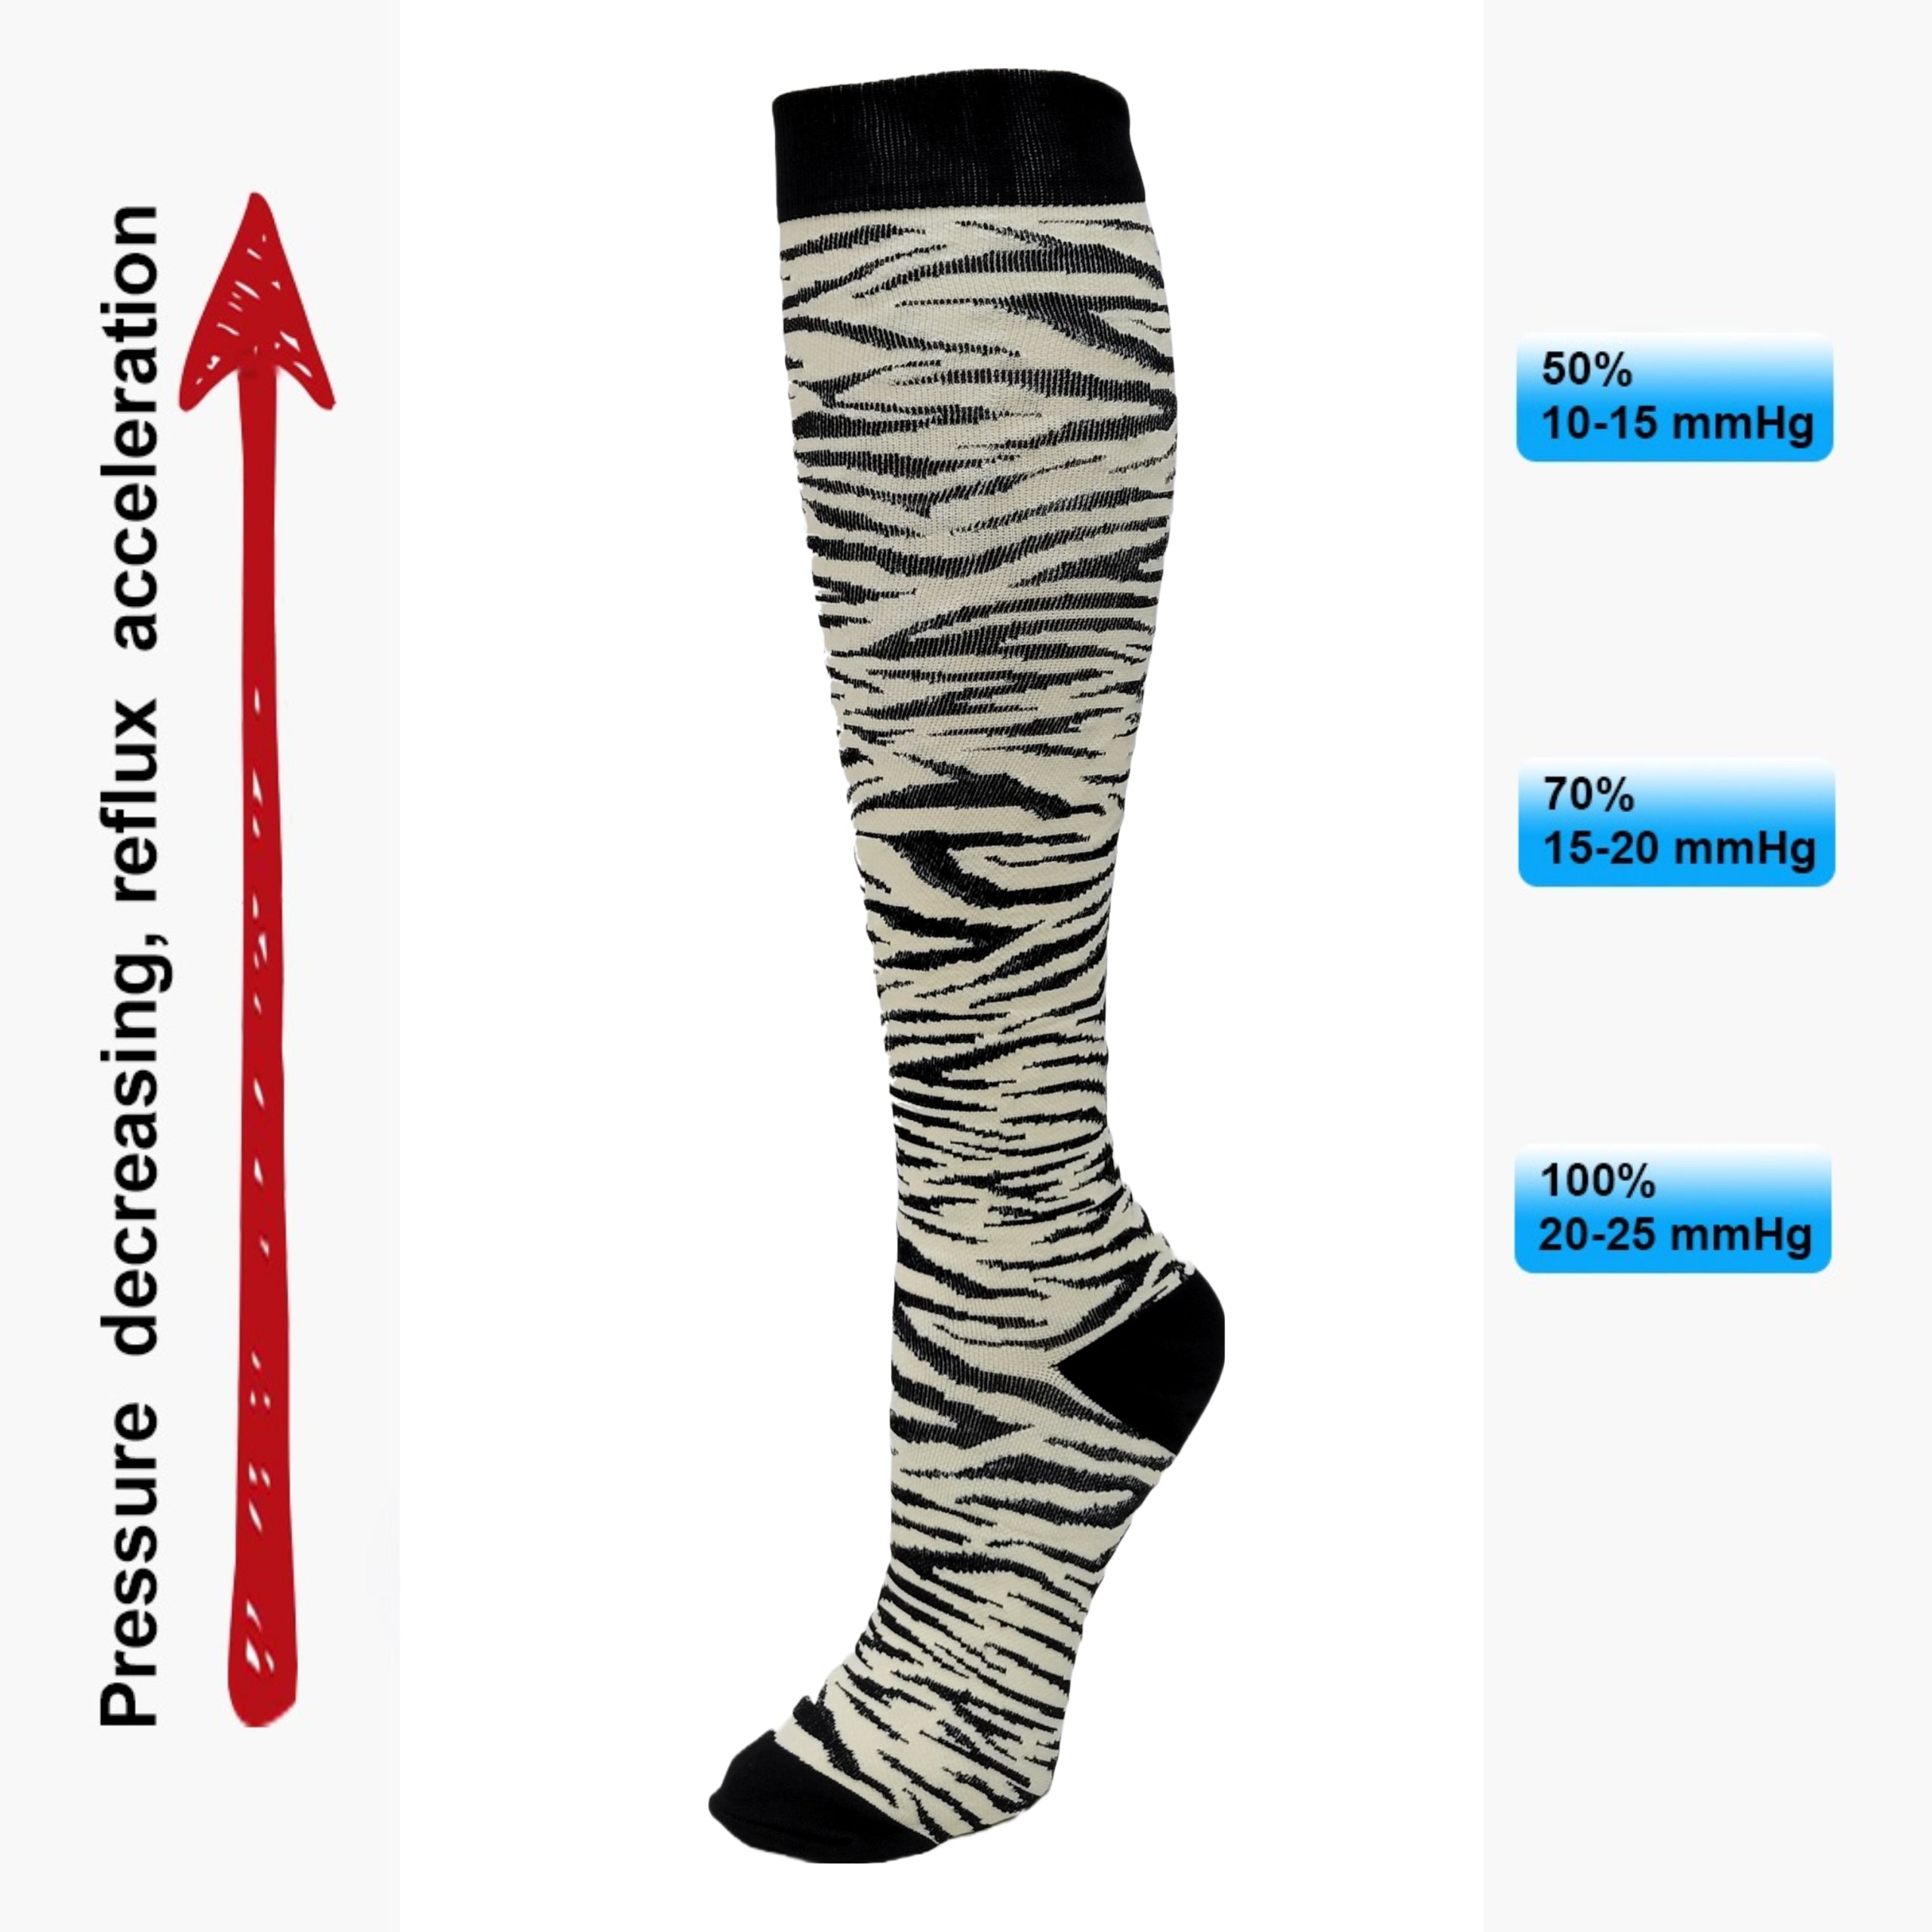 Off White Animal (Leopard) Print Knee High Socks (Compression Socks)